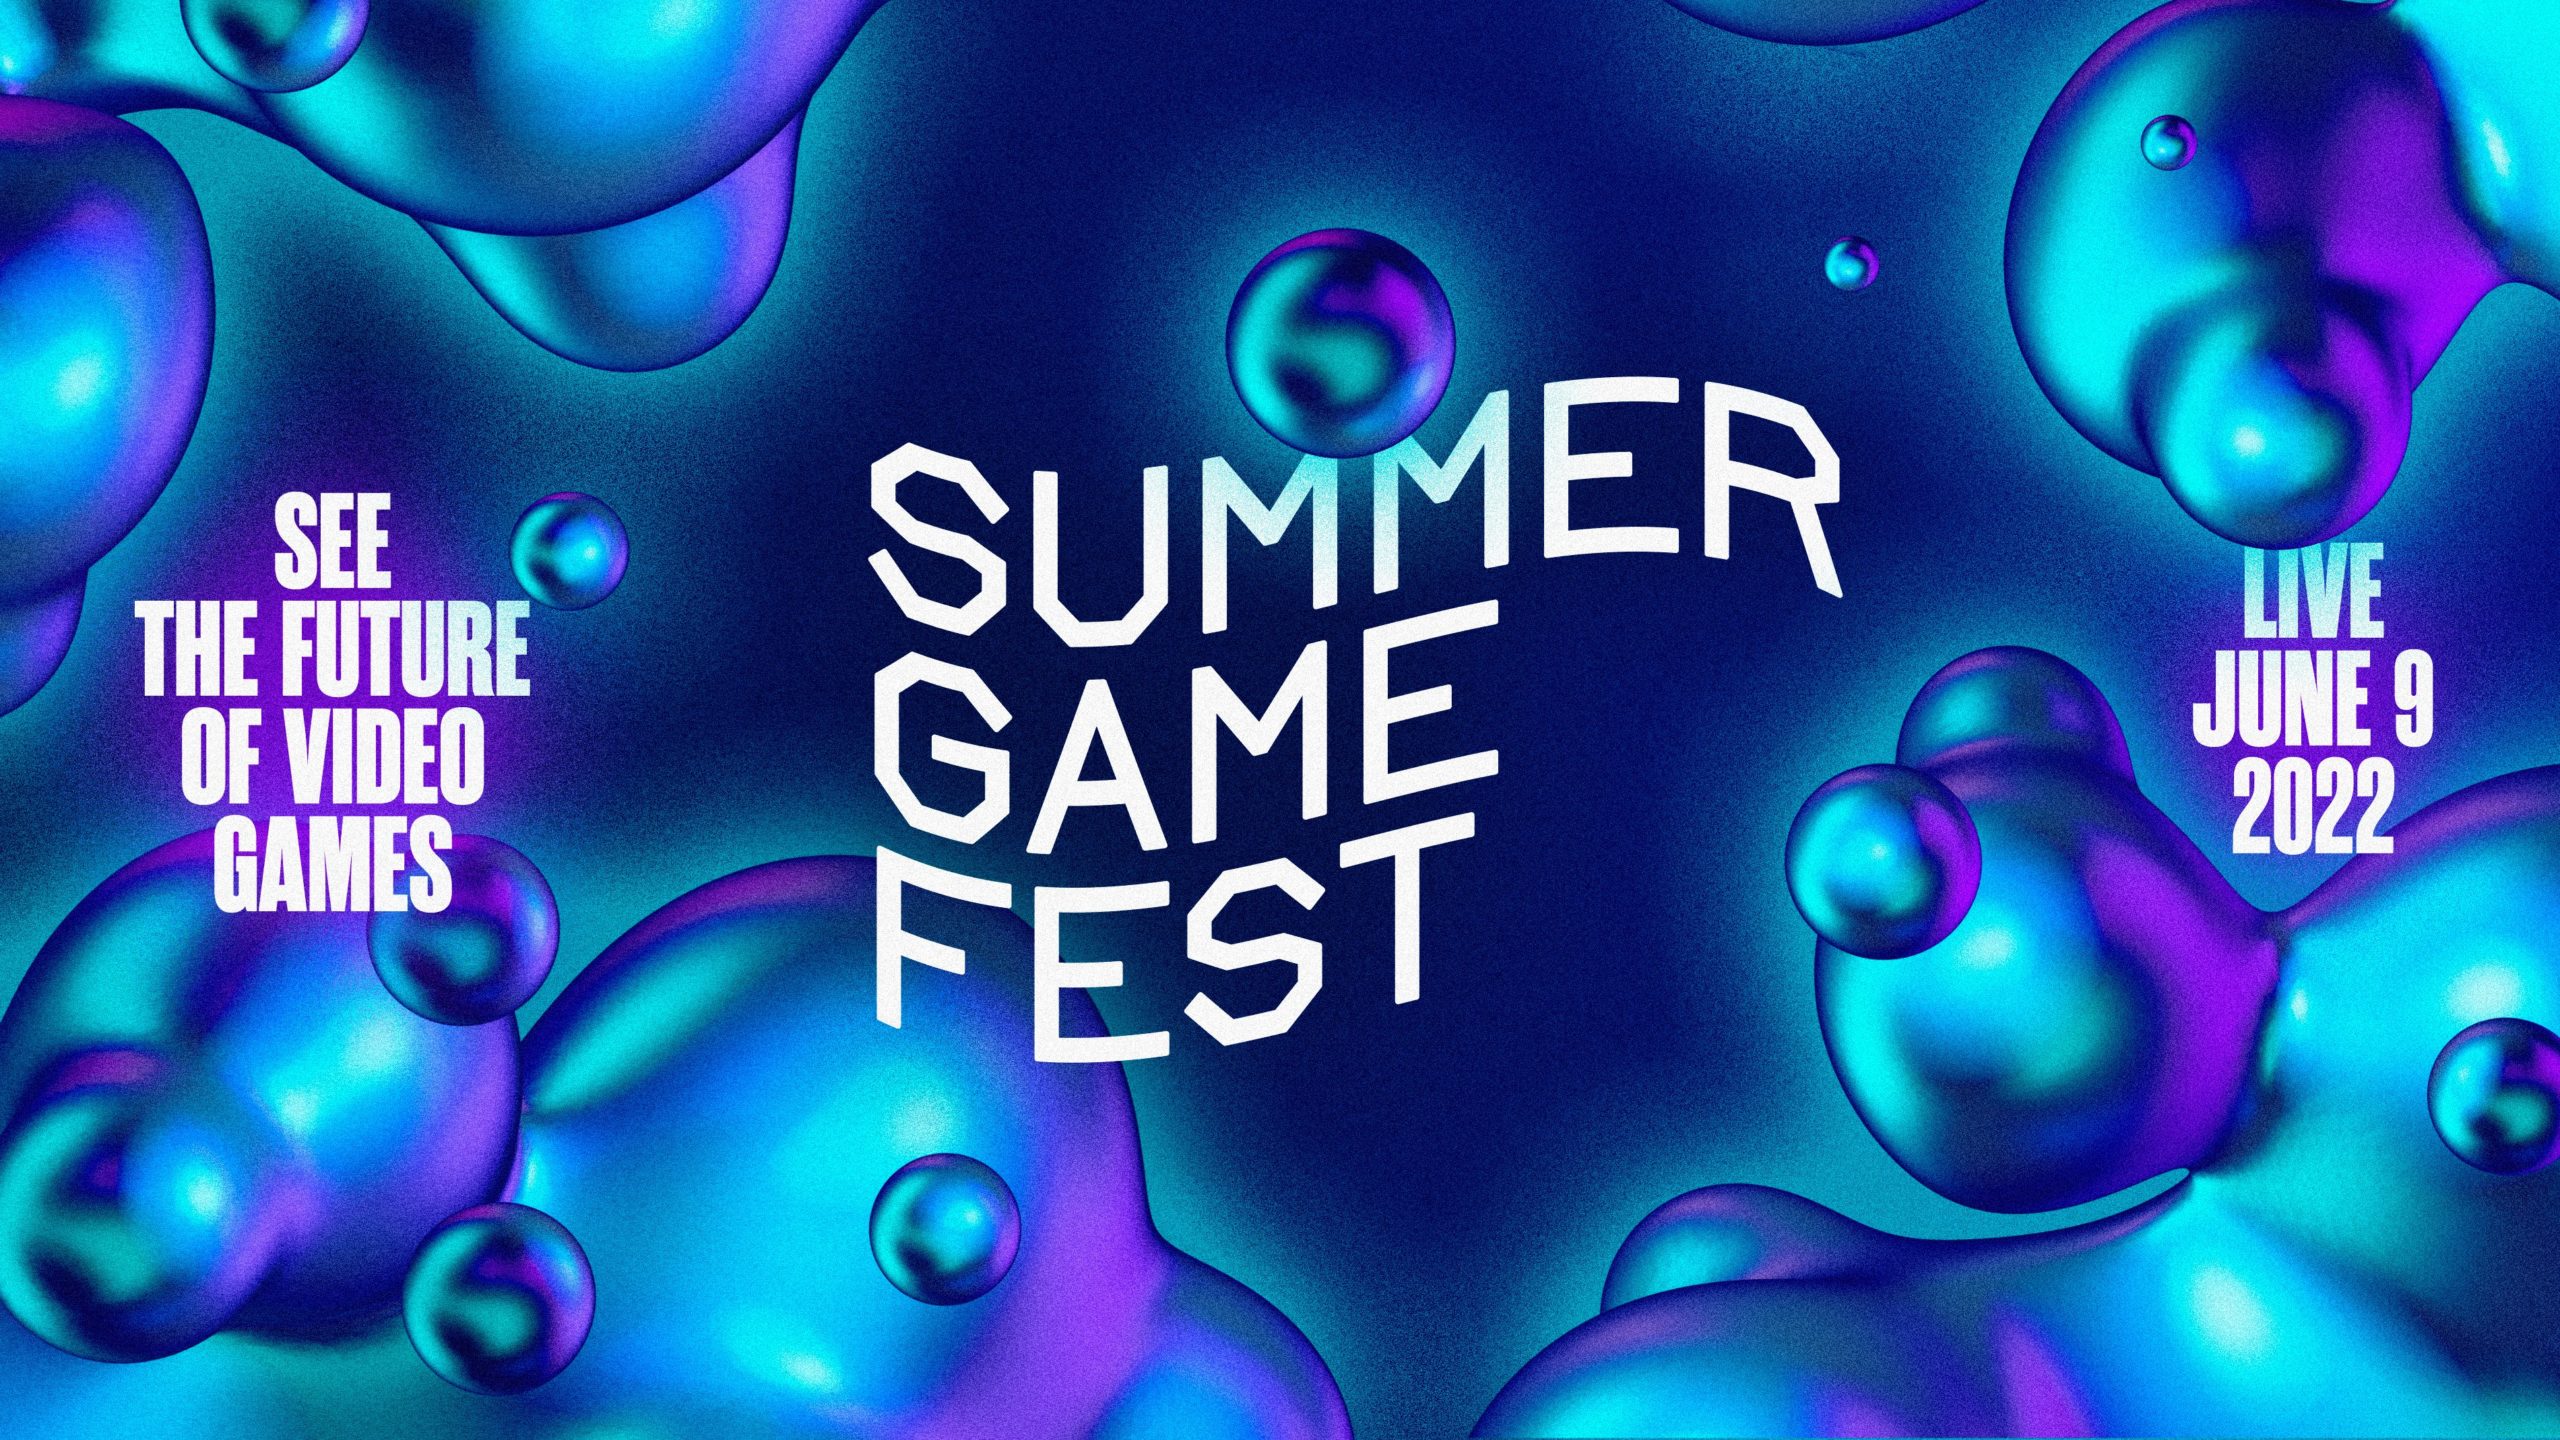 Summer Game Fest 2022 kicks off June 9